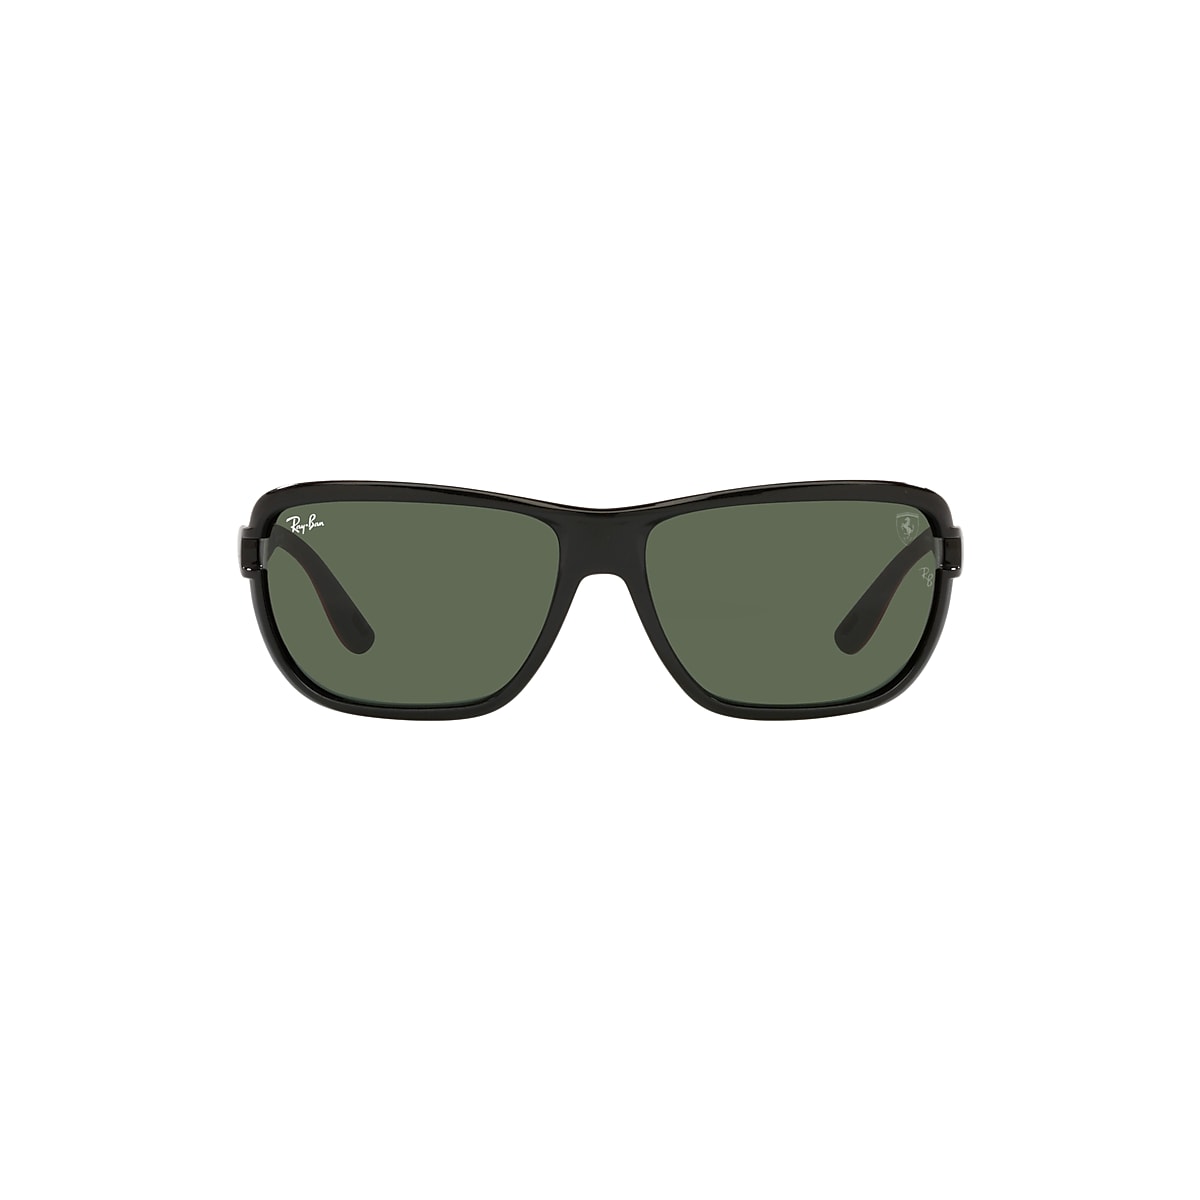 Rb4365m Scuderia Ferrari Collection Sunglasses in Black and Green | Ray-Ban®